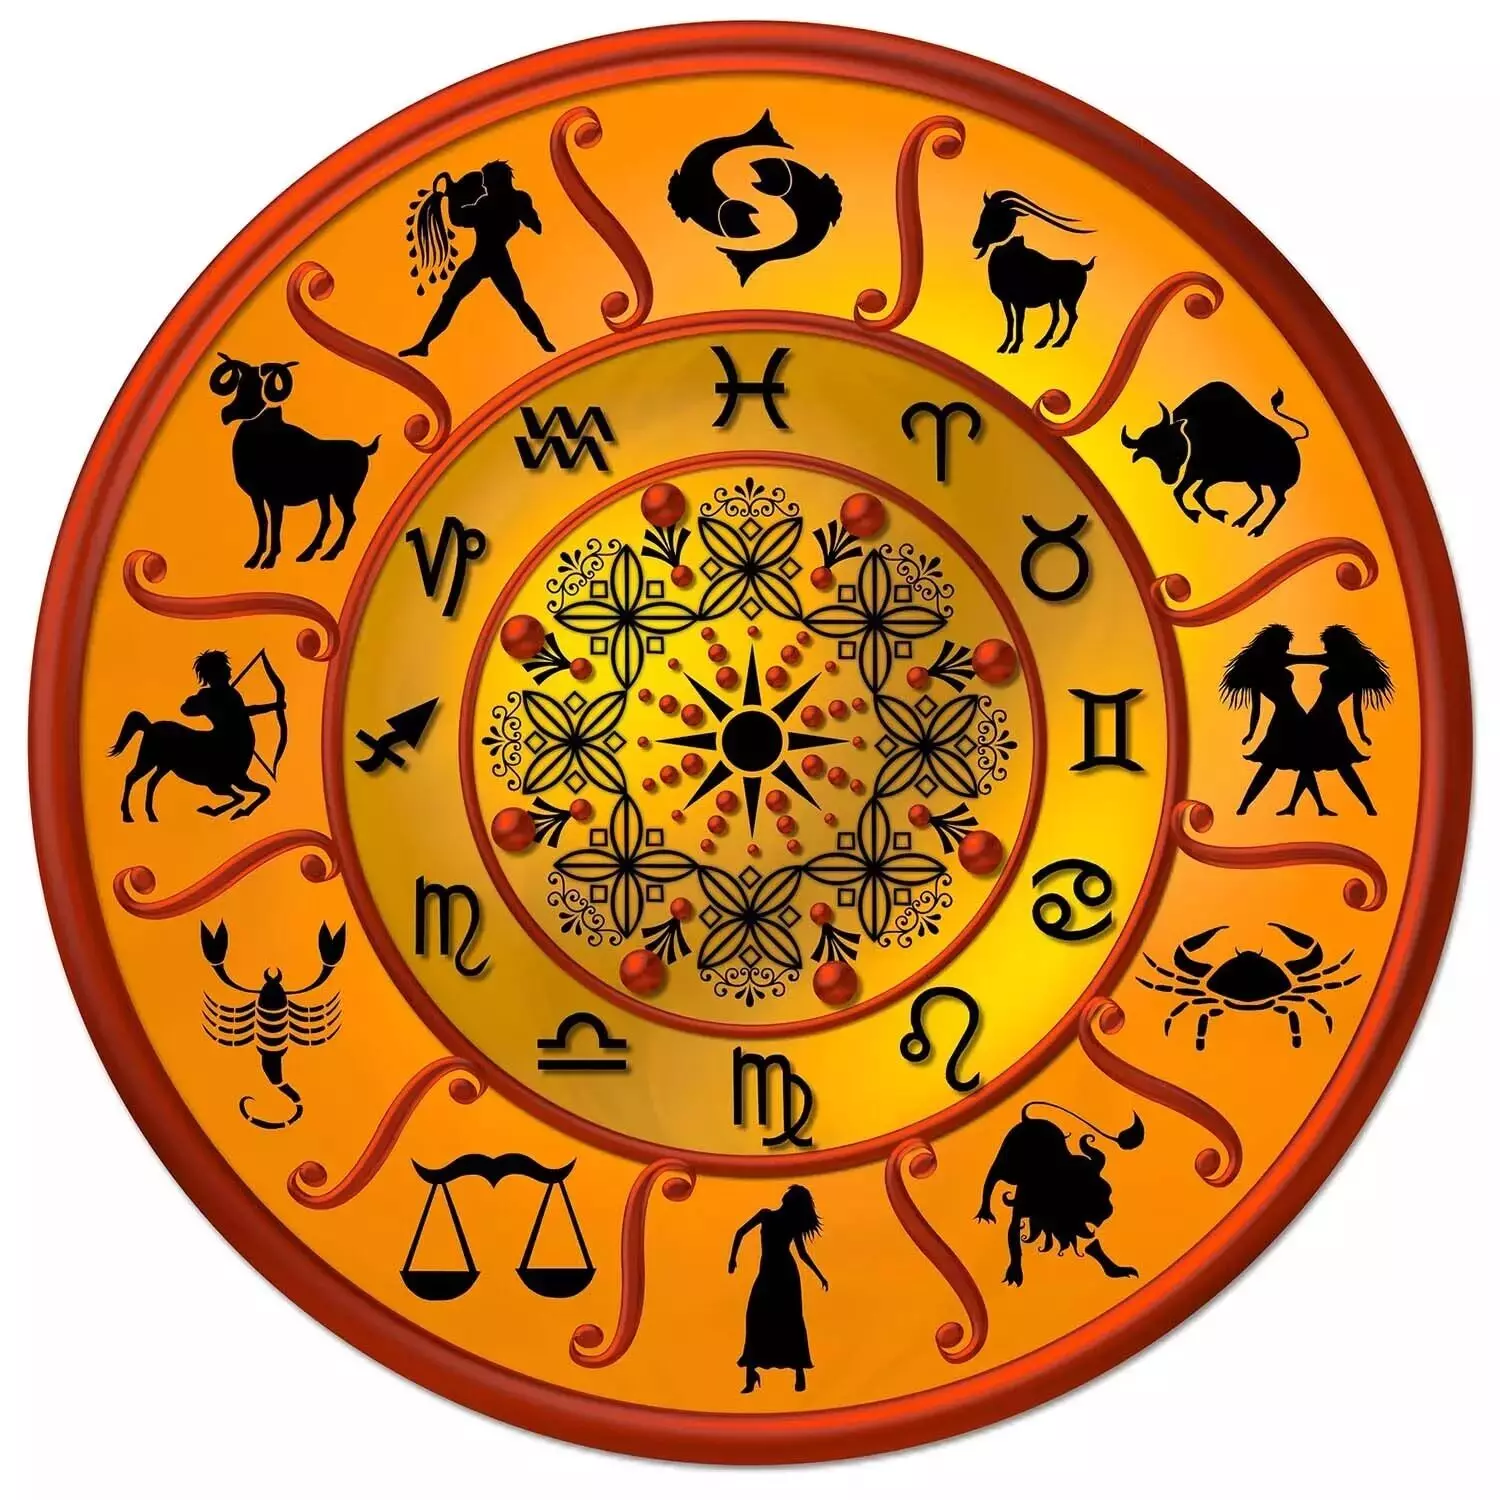 24 Novembar  – Know your todays horoscope